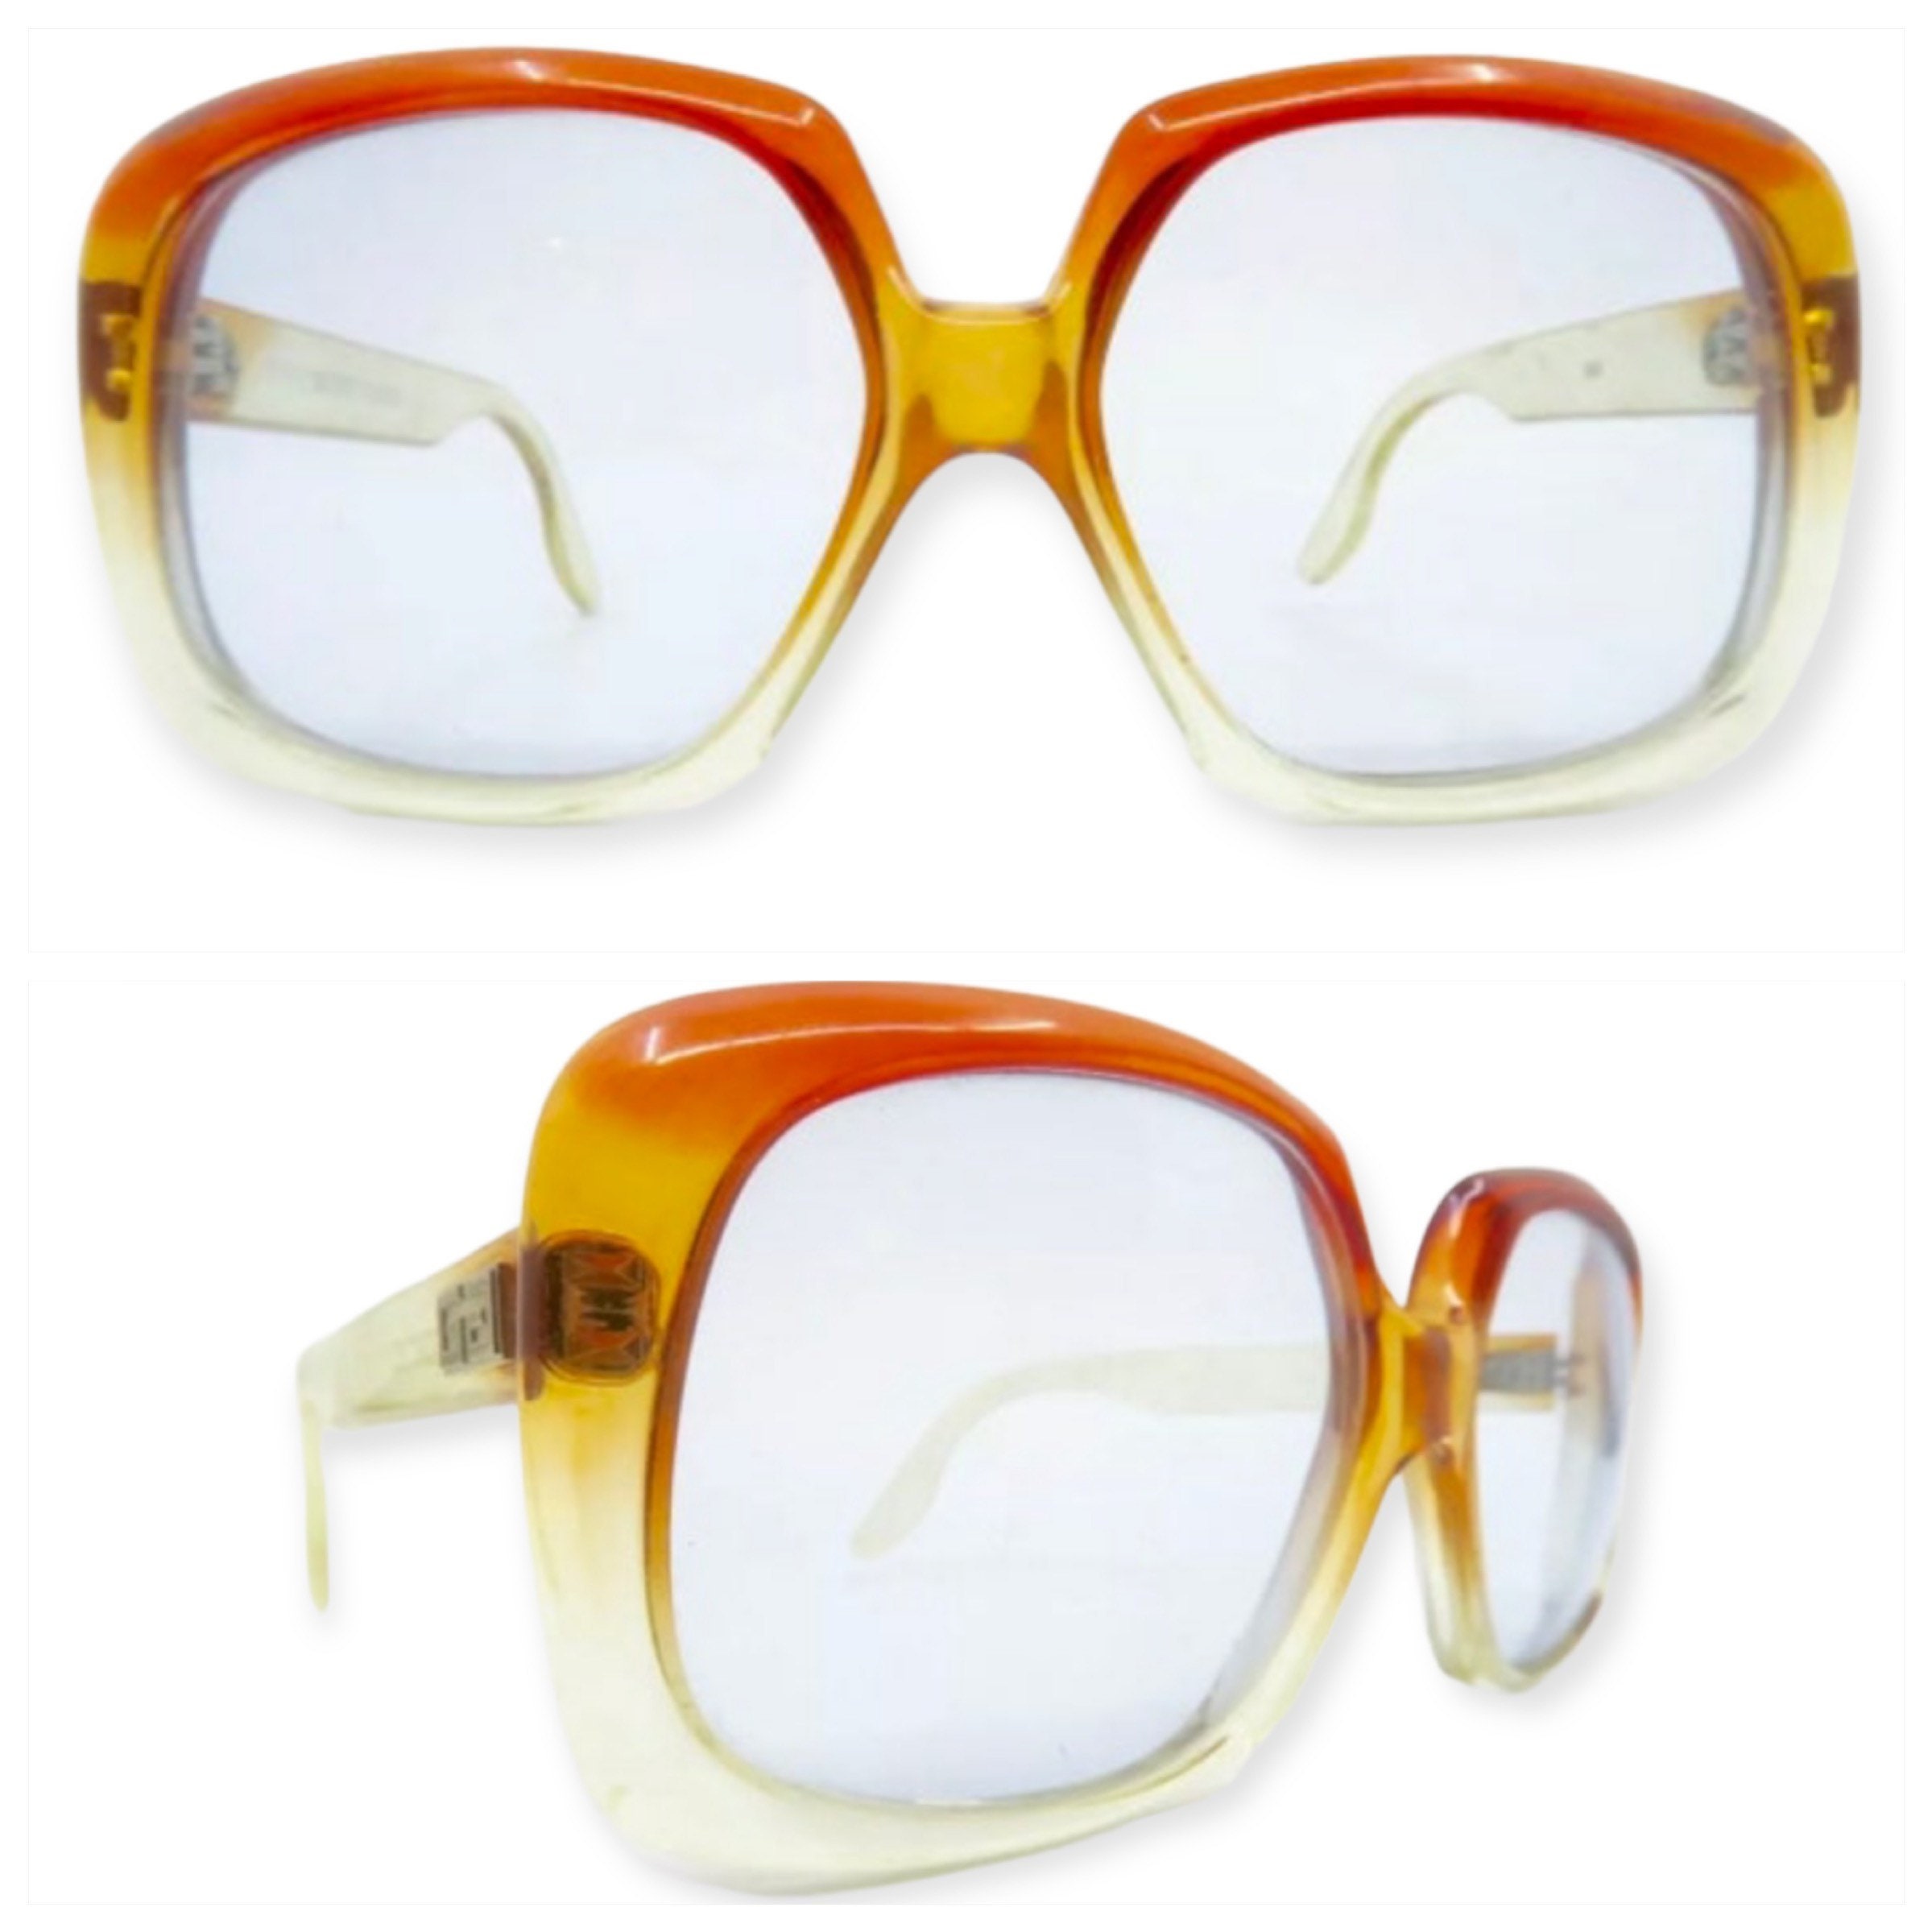  70s Super Oversize Square Sunglasses for Women Vintage  Rectangular Plastic Frame (Black, 60) : Clothing, Shoes & Jewelry